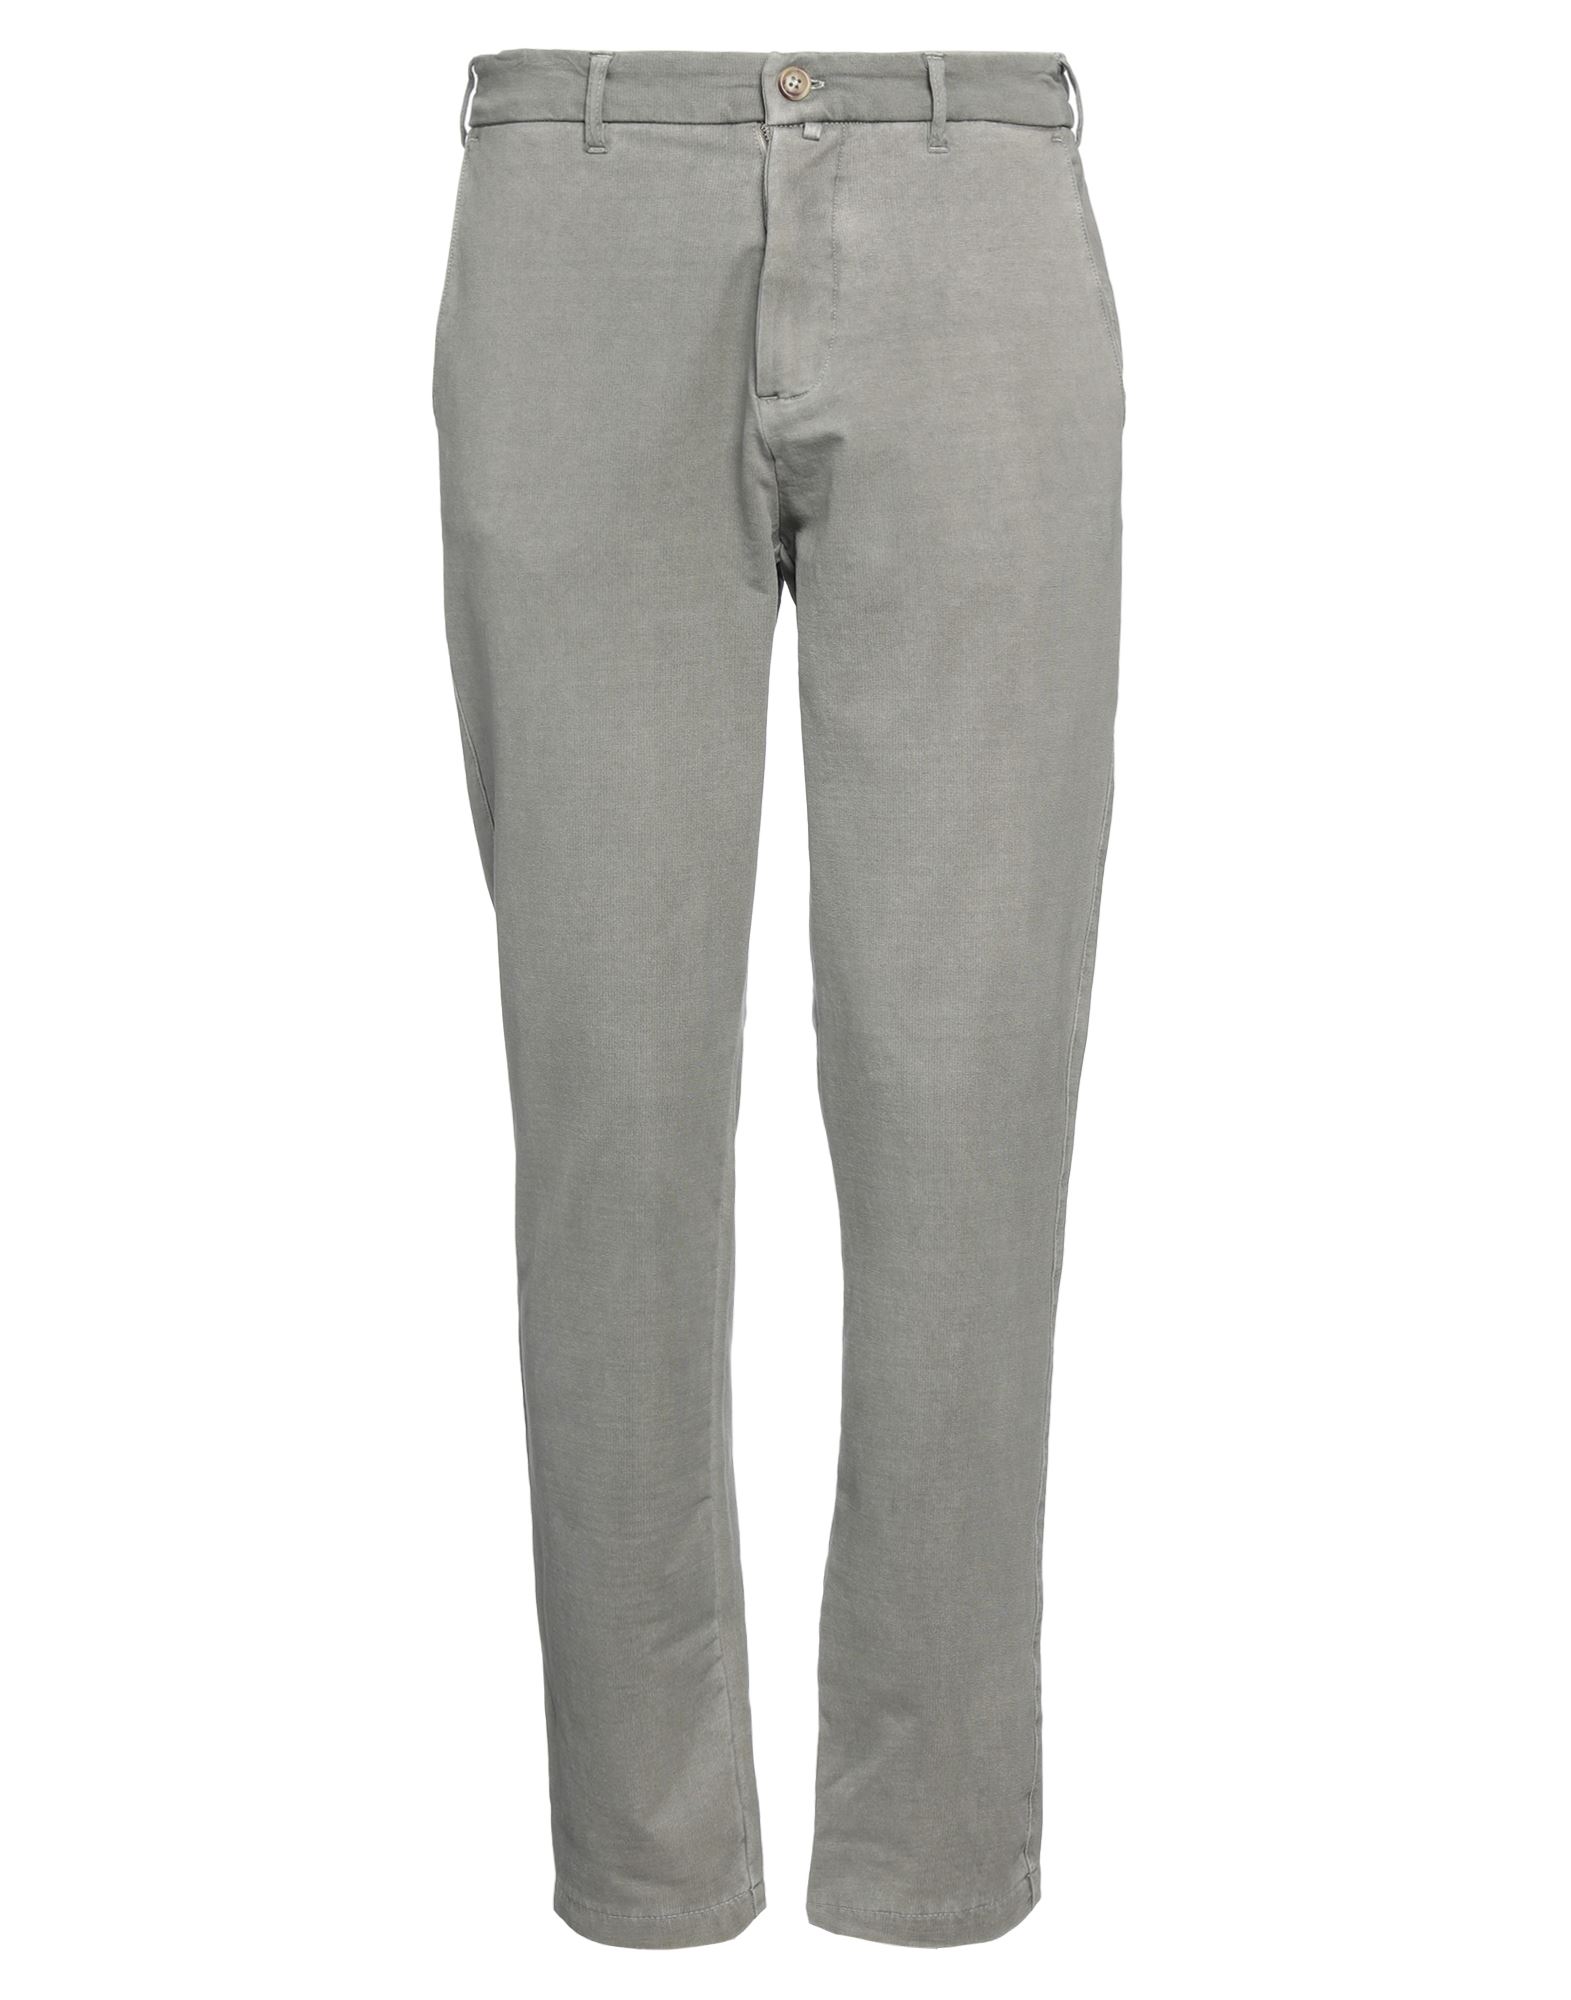 Homeward Clothes Pants In Grey